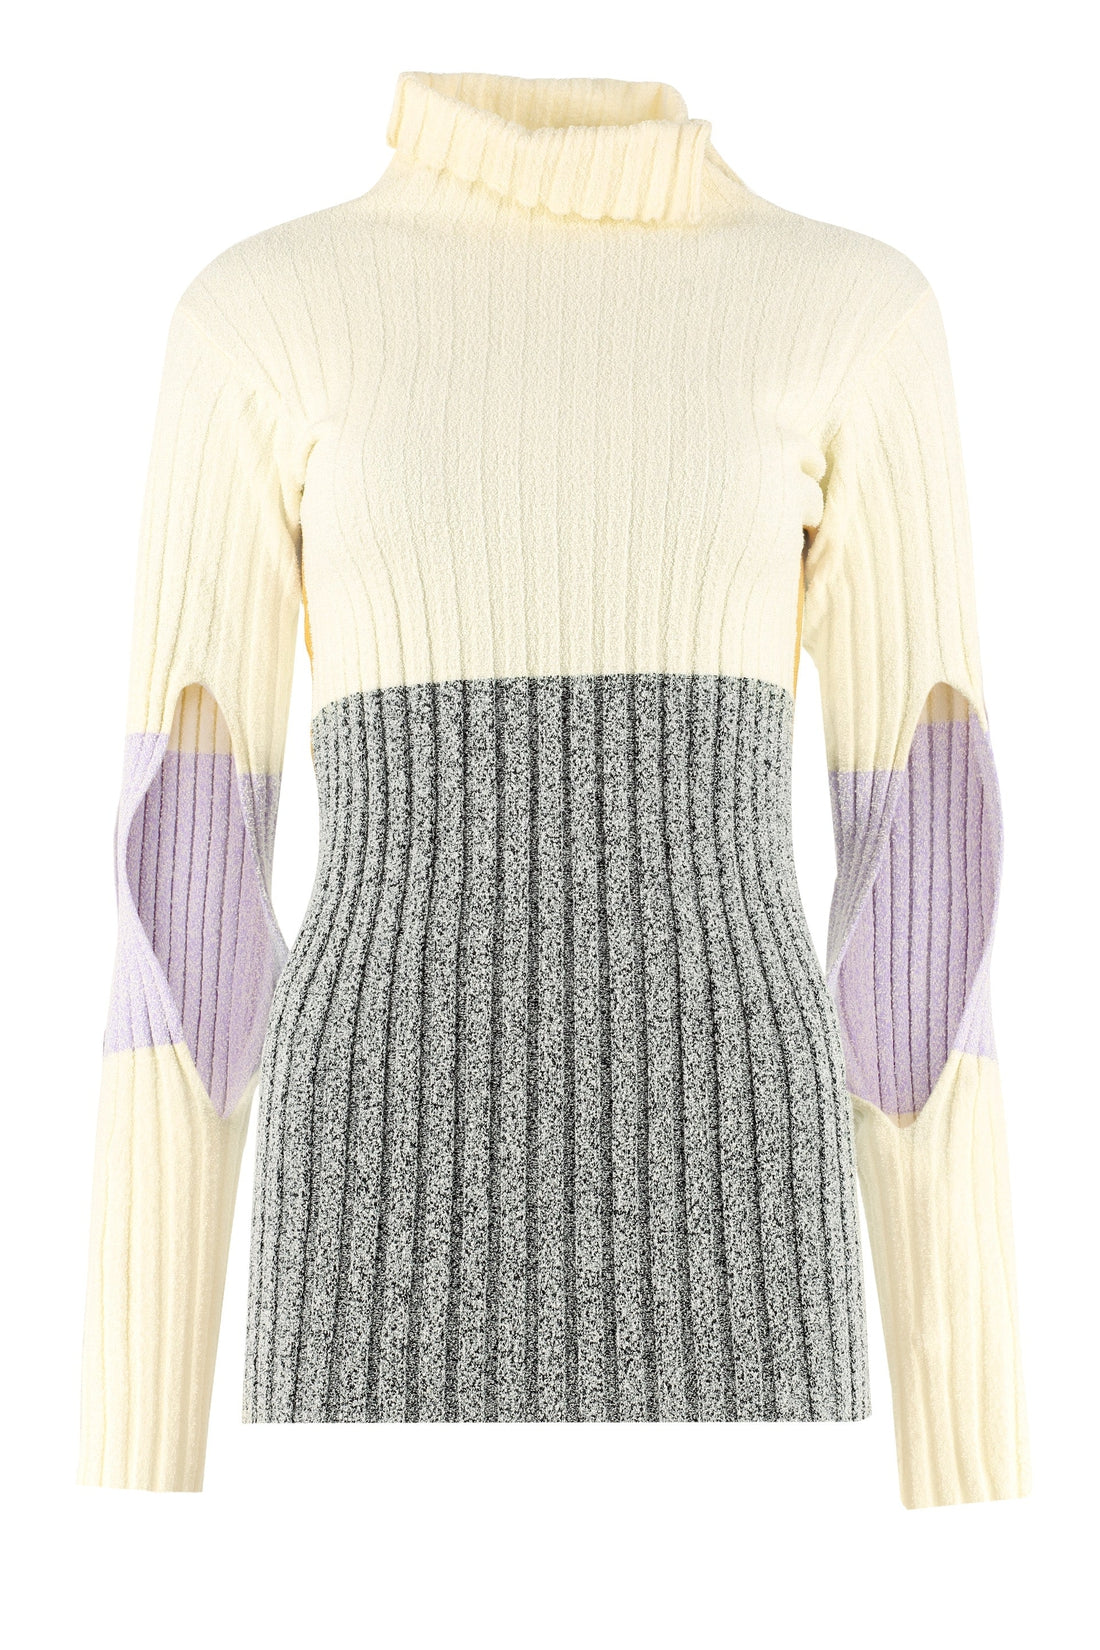 Moncler-OUTLET-SALE-2 Moncler 1952 - Ribbed turtleneck sweater-ARCHIVIST